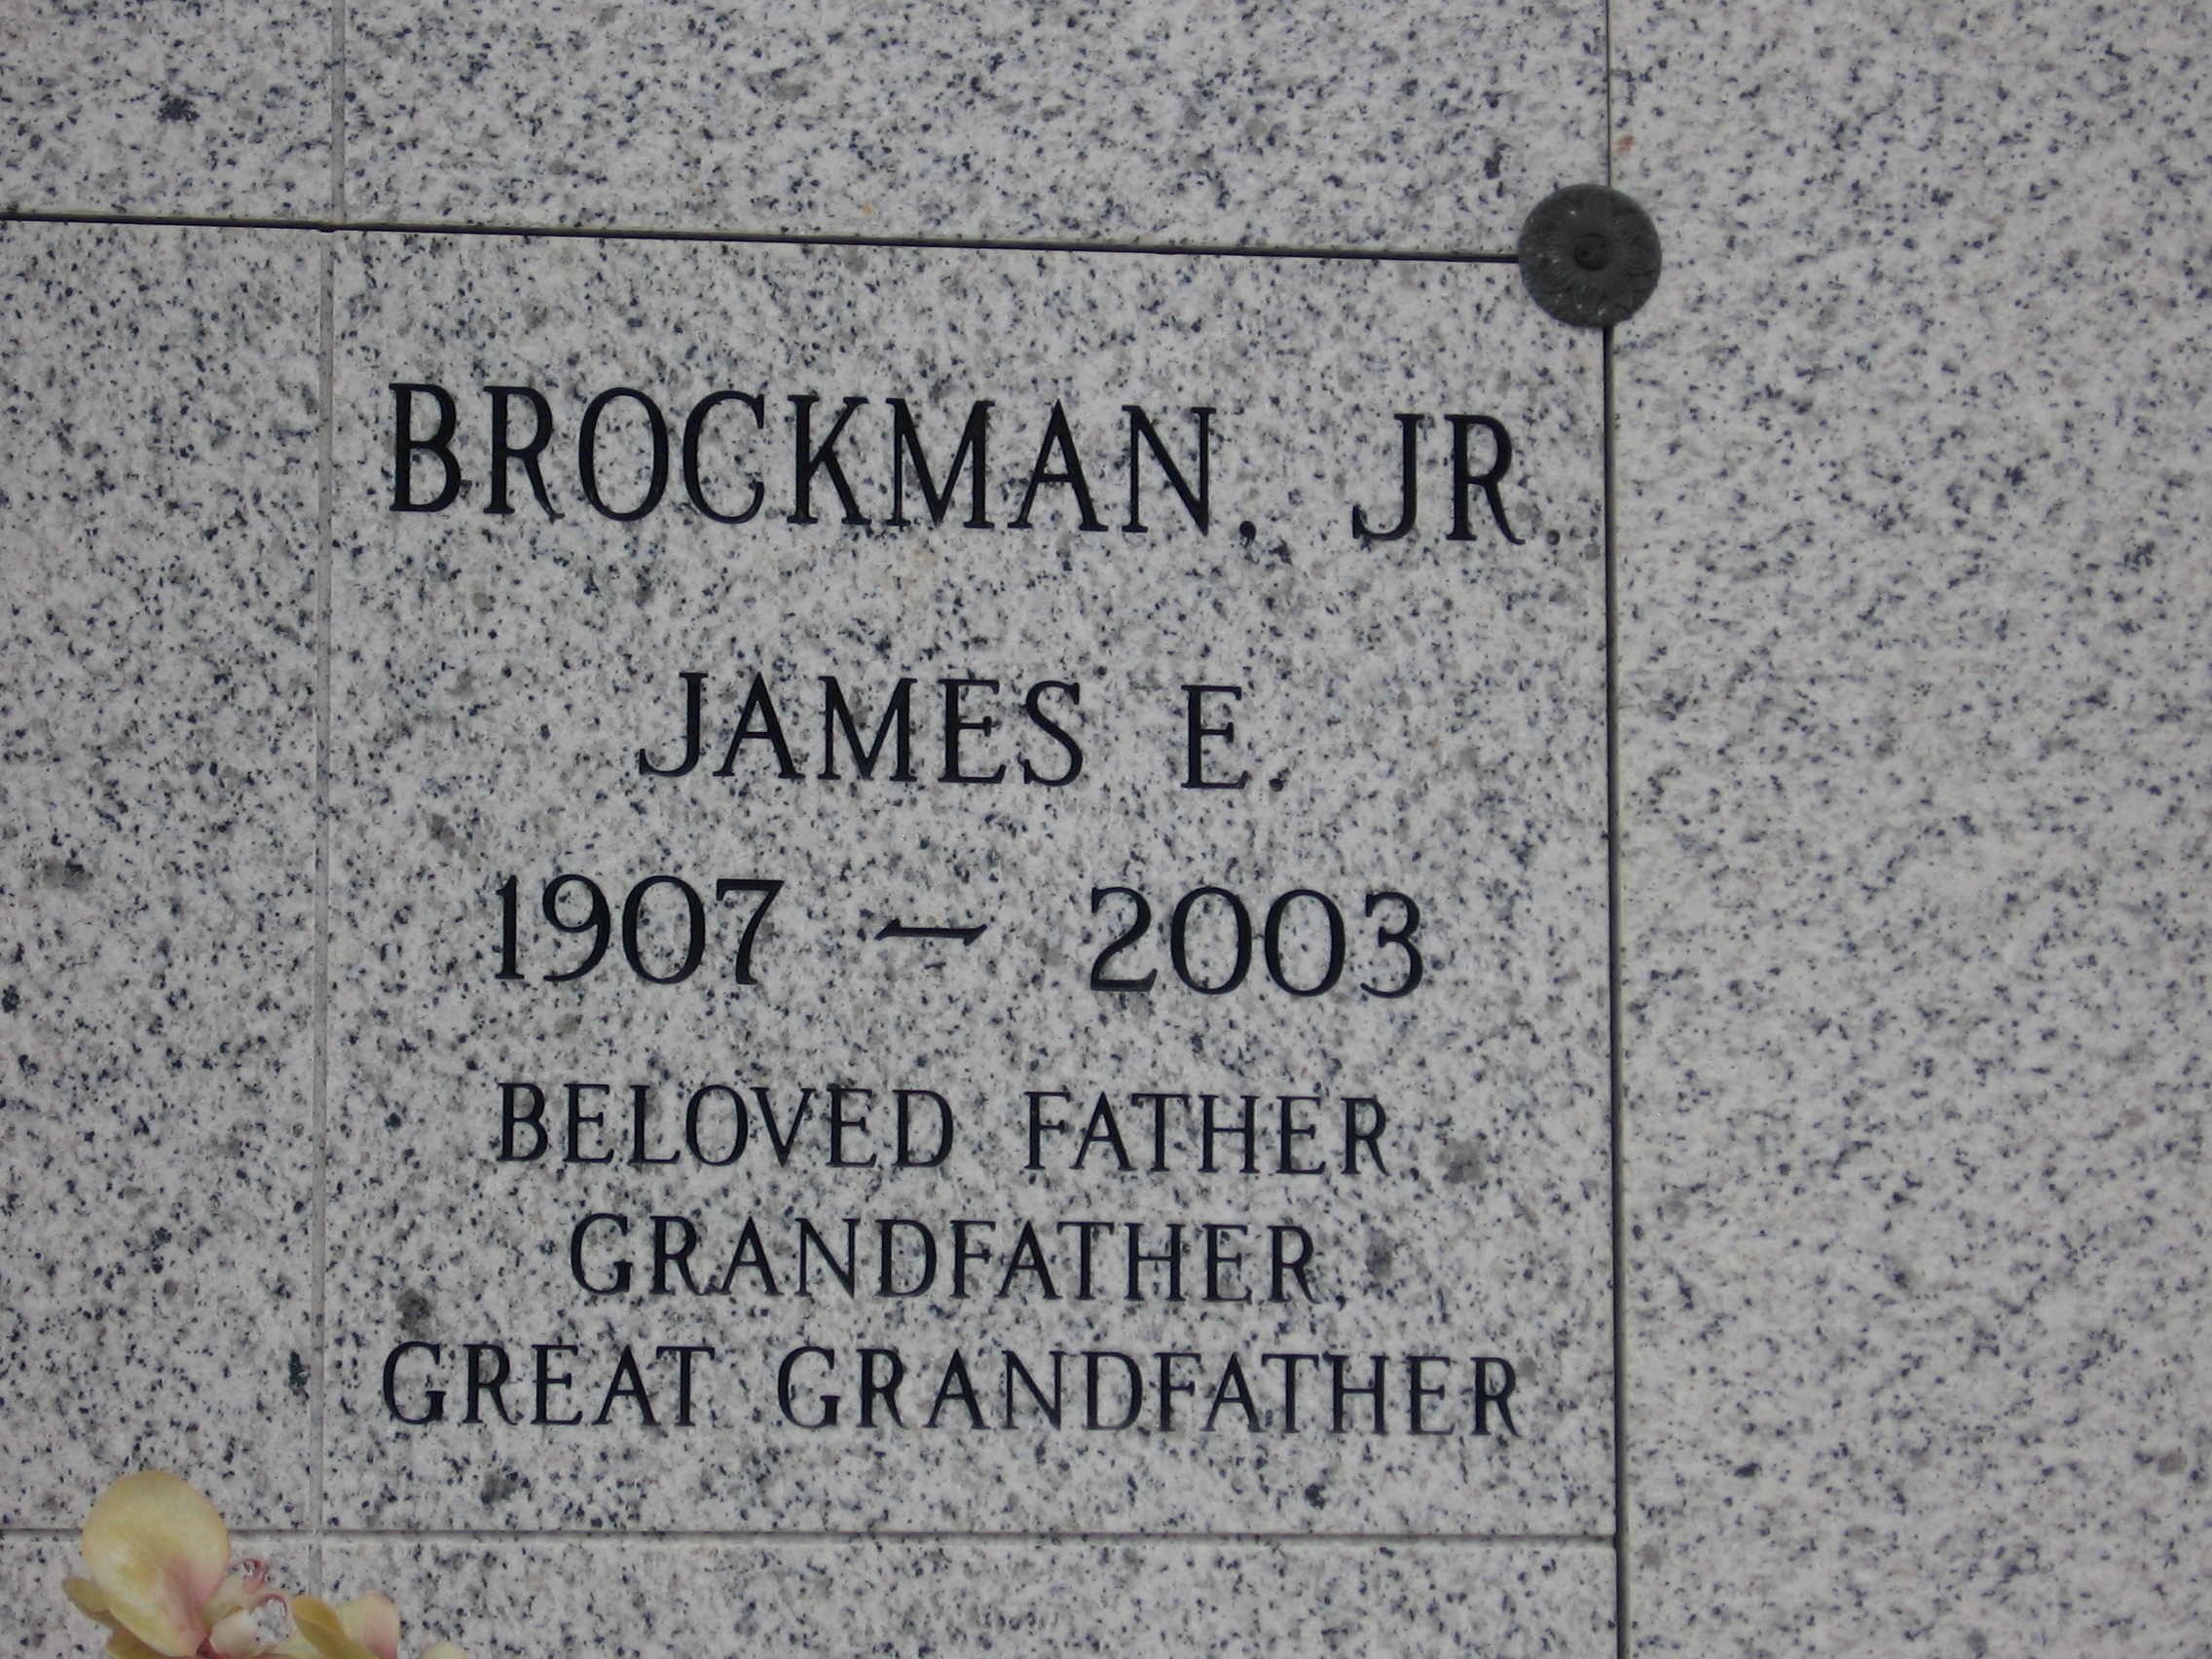 James E Brockman, Jr